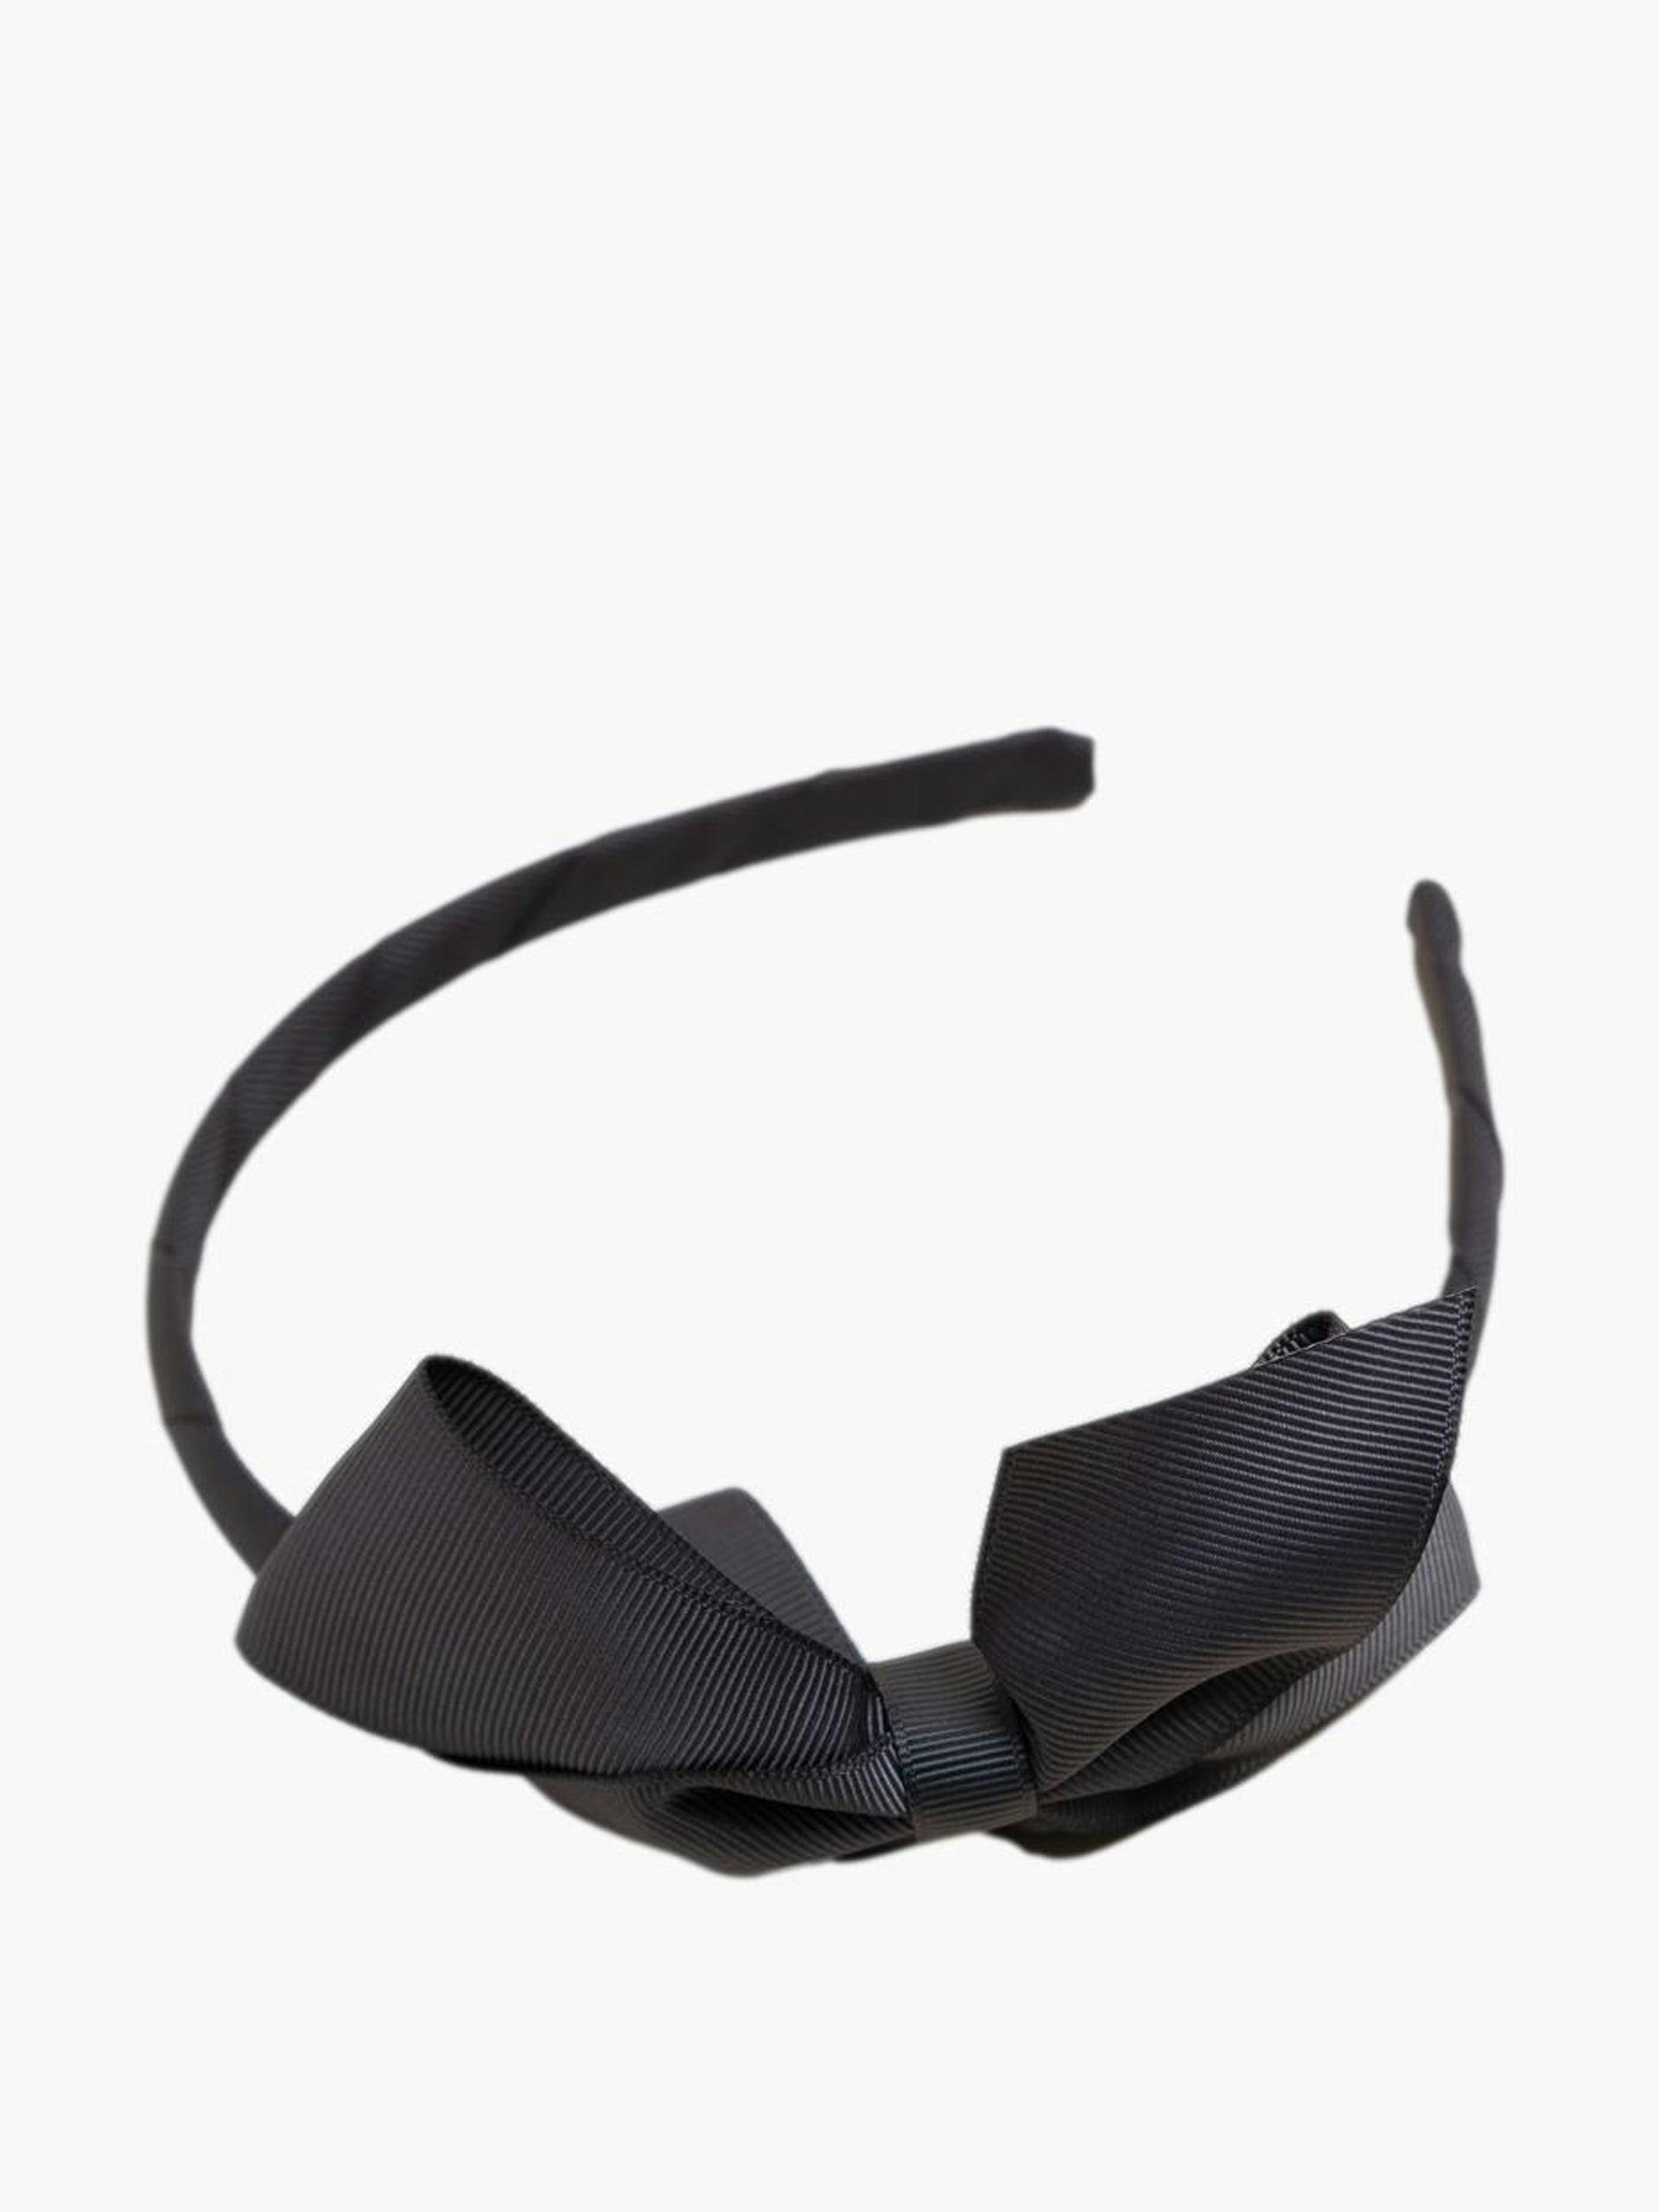 Charcoal black children's side-bow headband